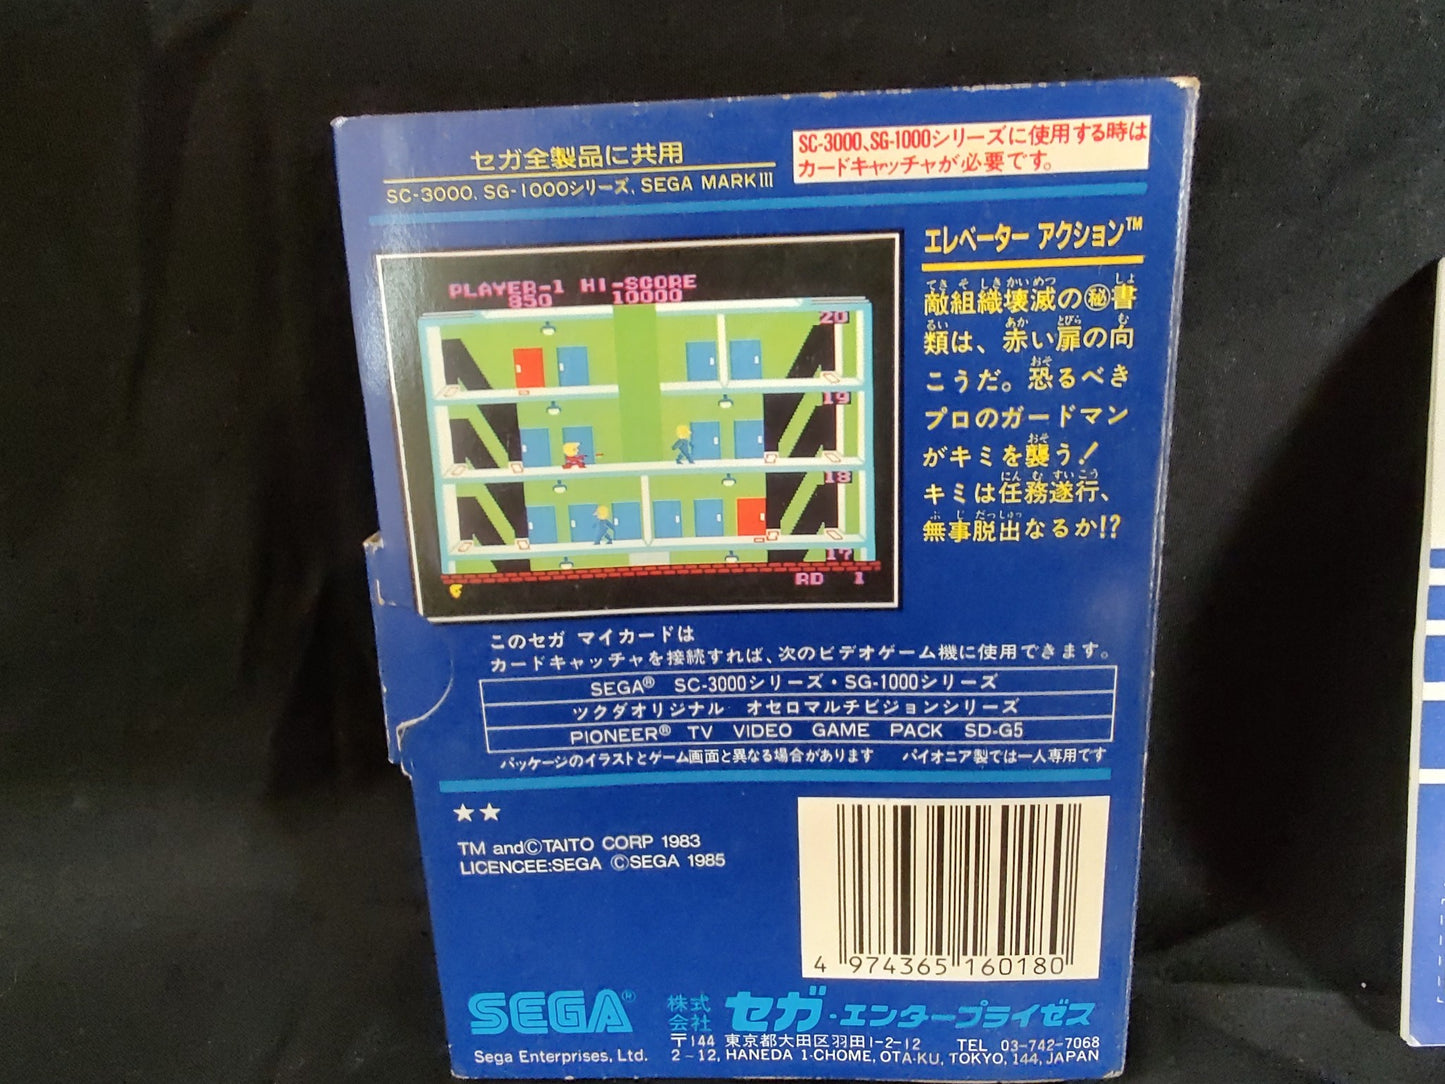 ELEVATOR ACTION Game Card only SEGA Master system MK-2000/Mark3  Working-f1221-